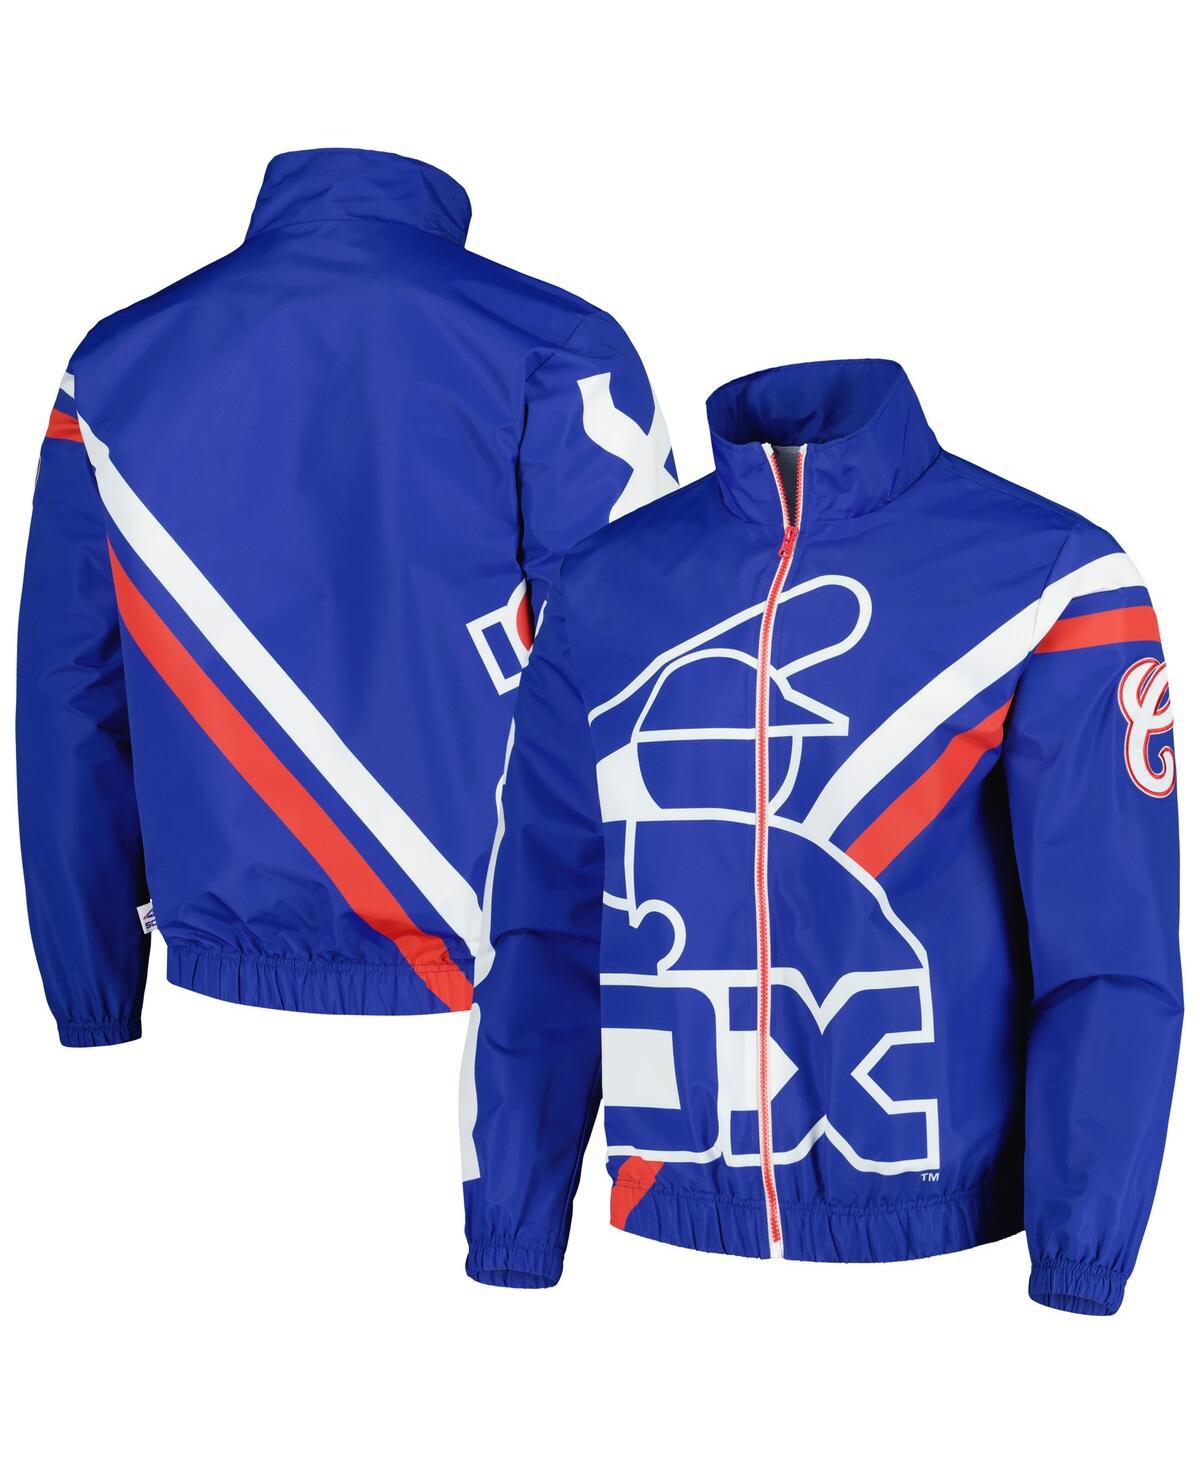 Shop Mitchell & Ness Men's  Royal Chicago White Sox Exploded Logo Warm Up Full-zip Jacket